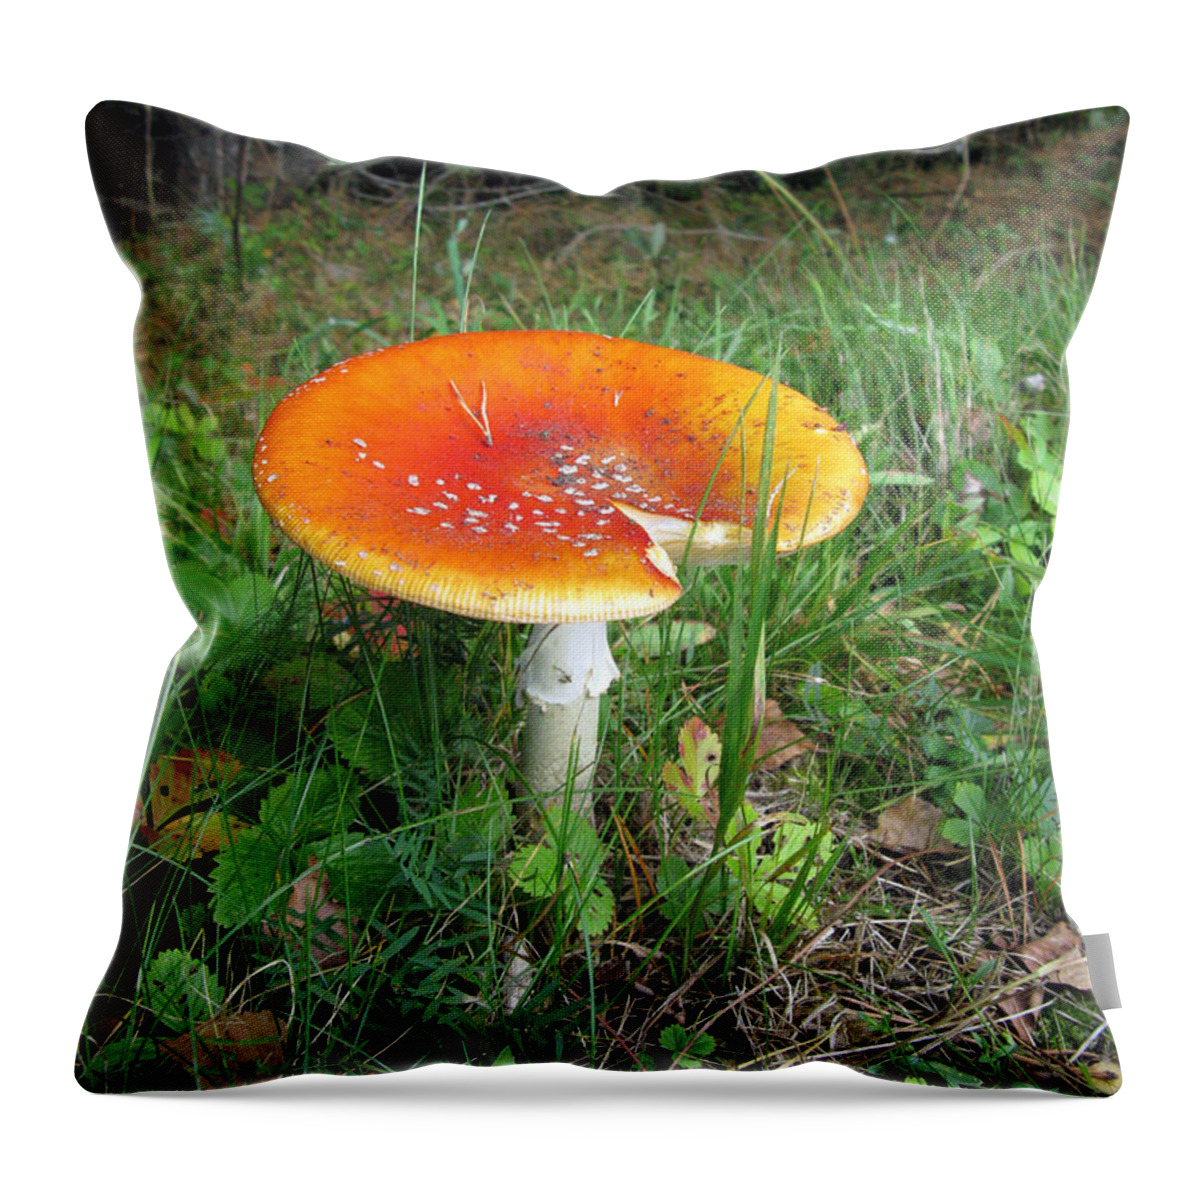 Mushroom Throw Pillow featuring the photograph Pretty But Dangerous by Ausra Huntington nee Paulauskaite